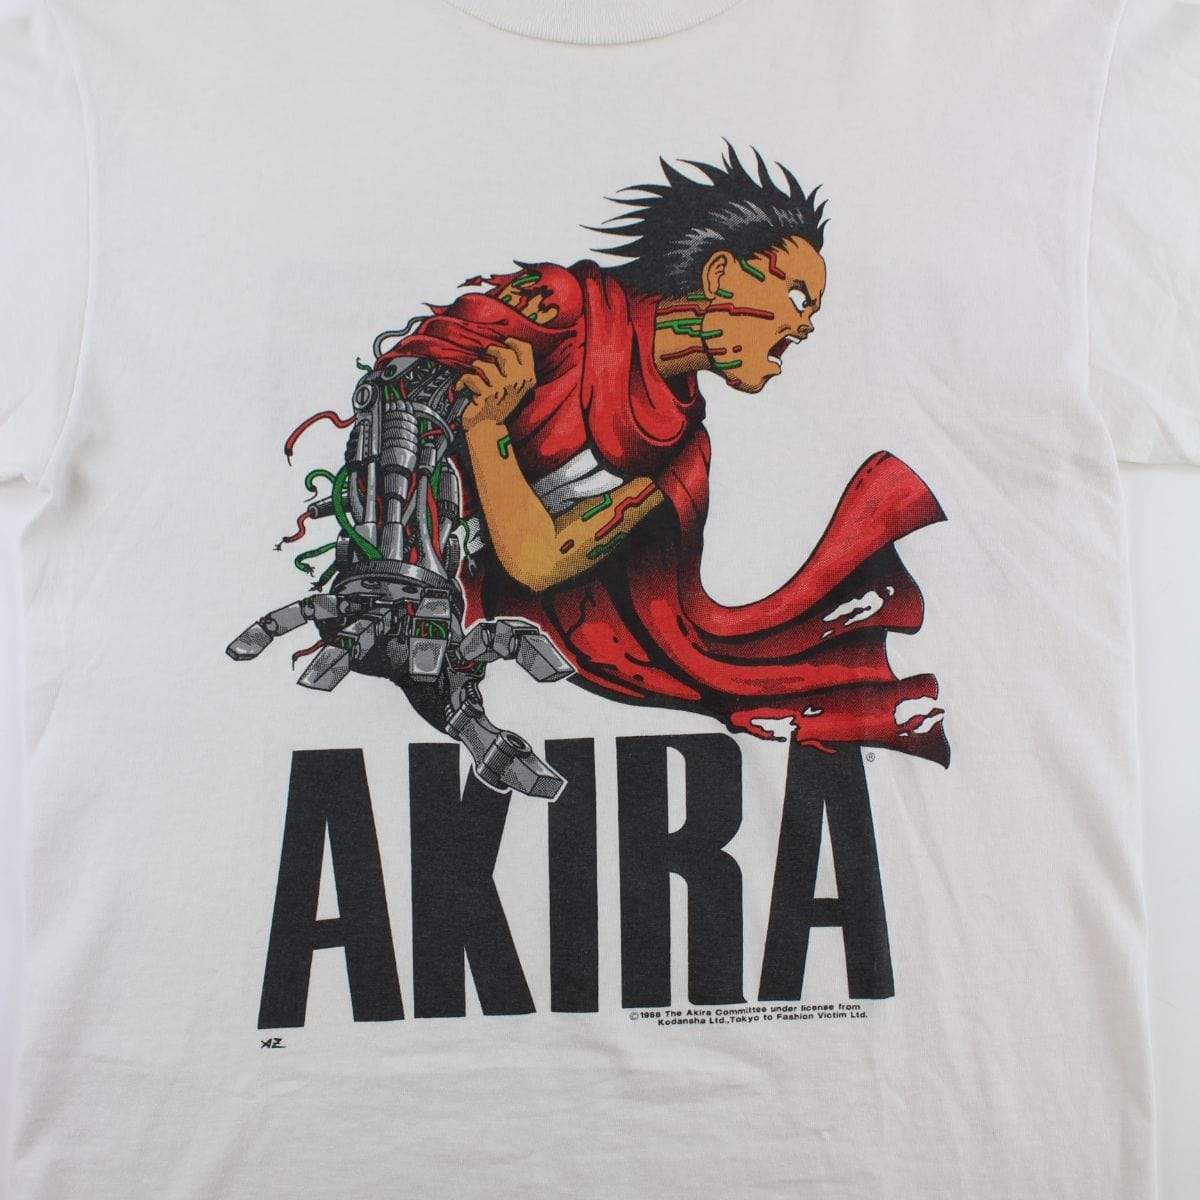 Akira tetsuo Bionic Arm Tee White 1988 fashion victim - SaruGeneral